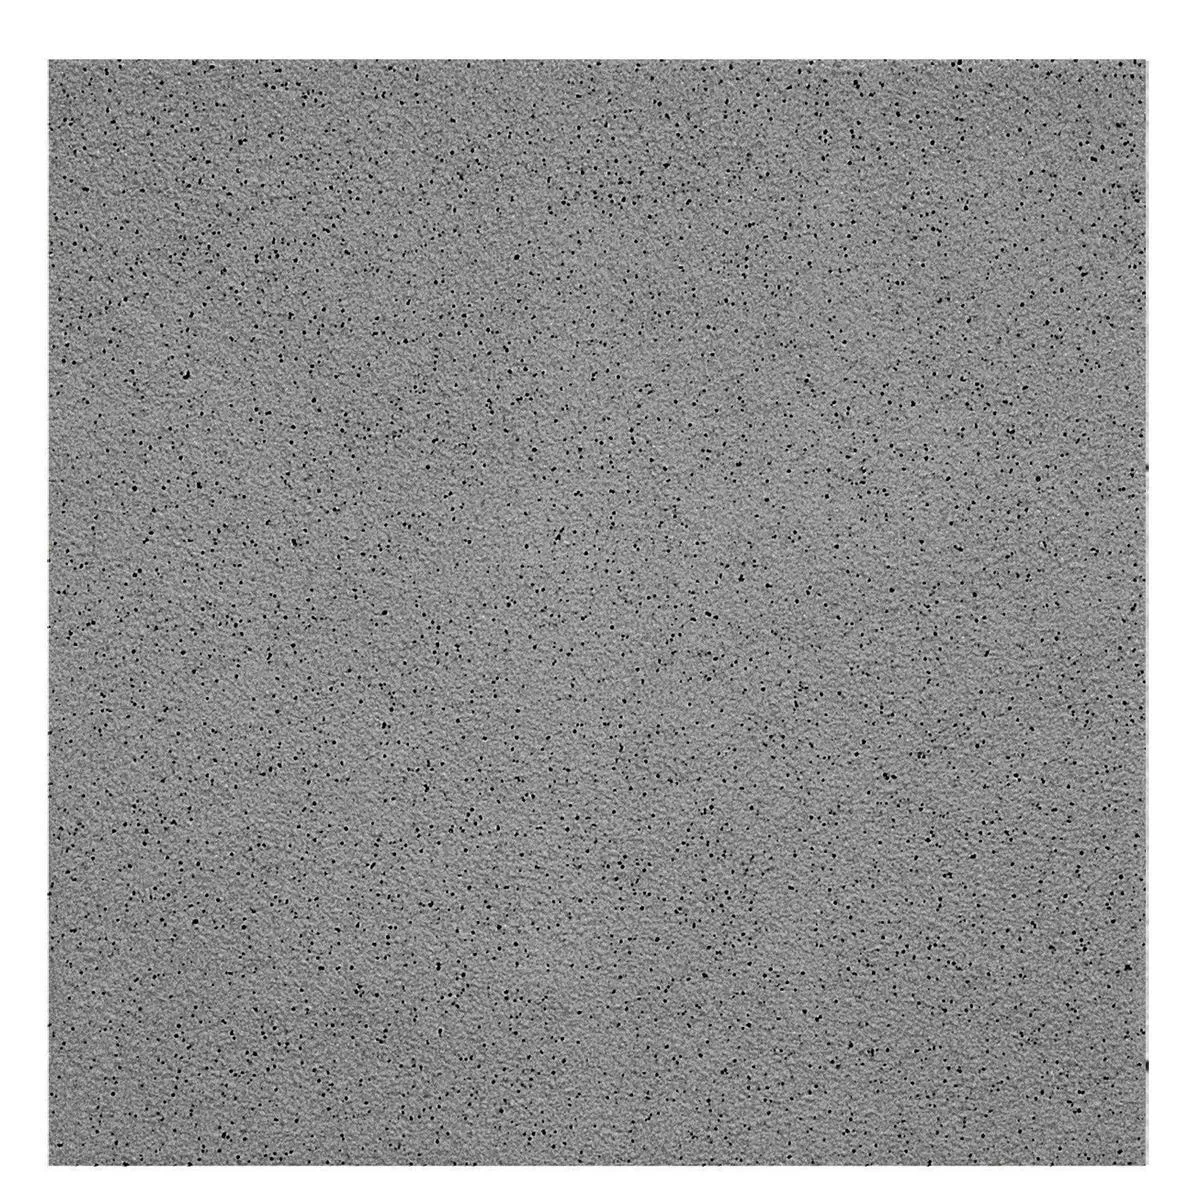 Sample Floor Tiles Fine Grain R11/B Anthracite 15x15cm